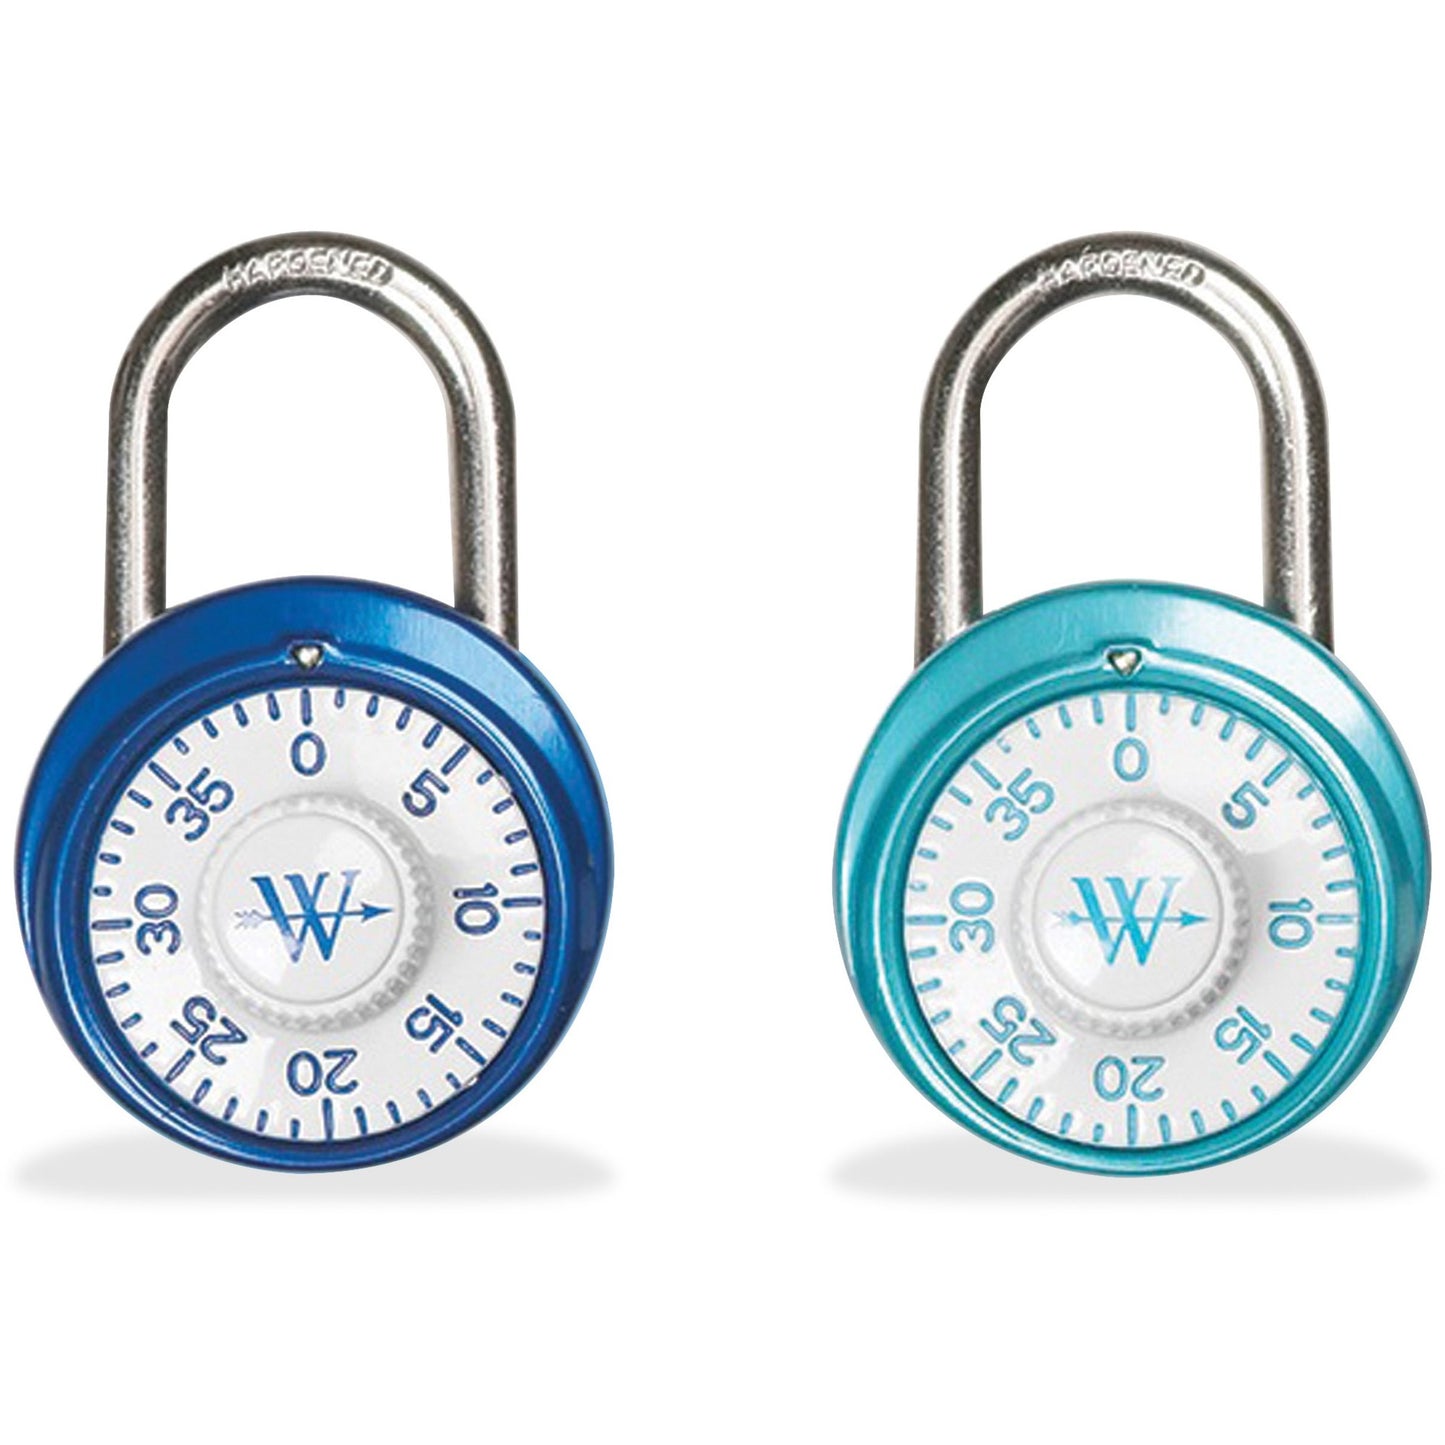 Westcott Combination Lock